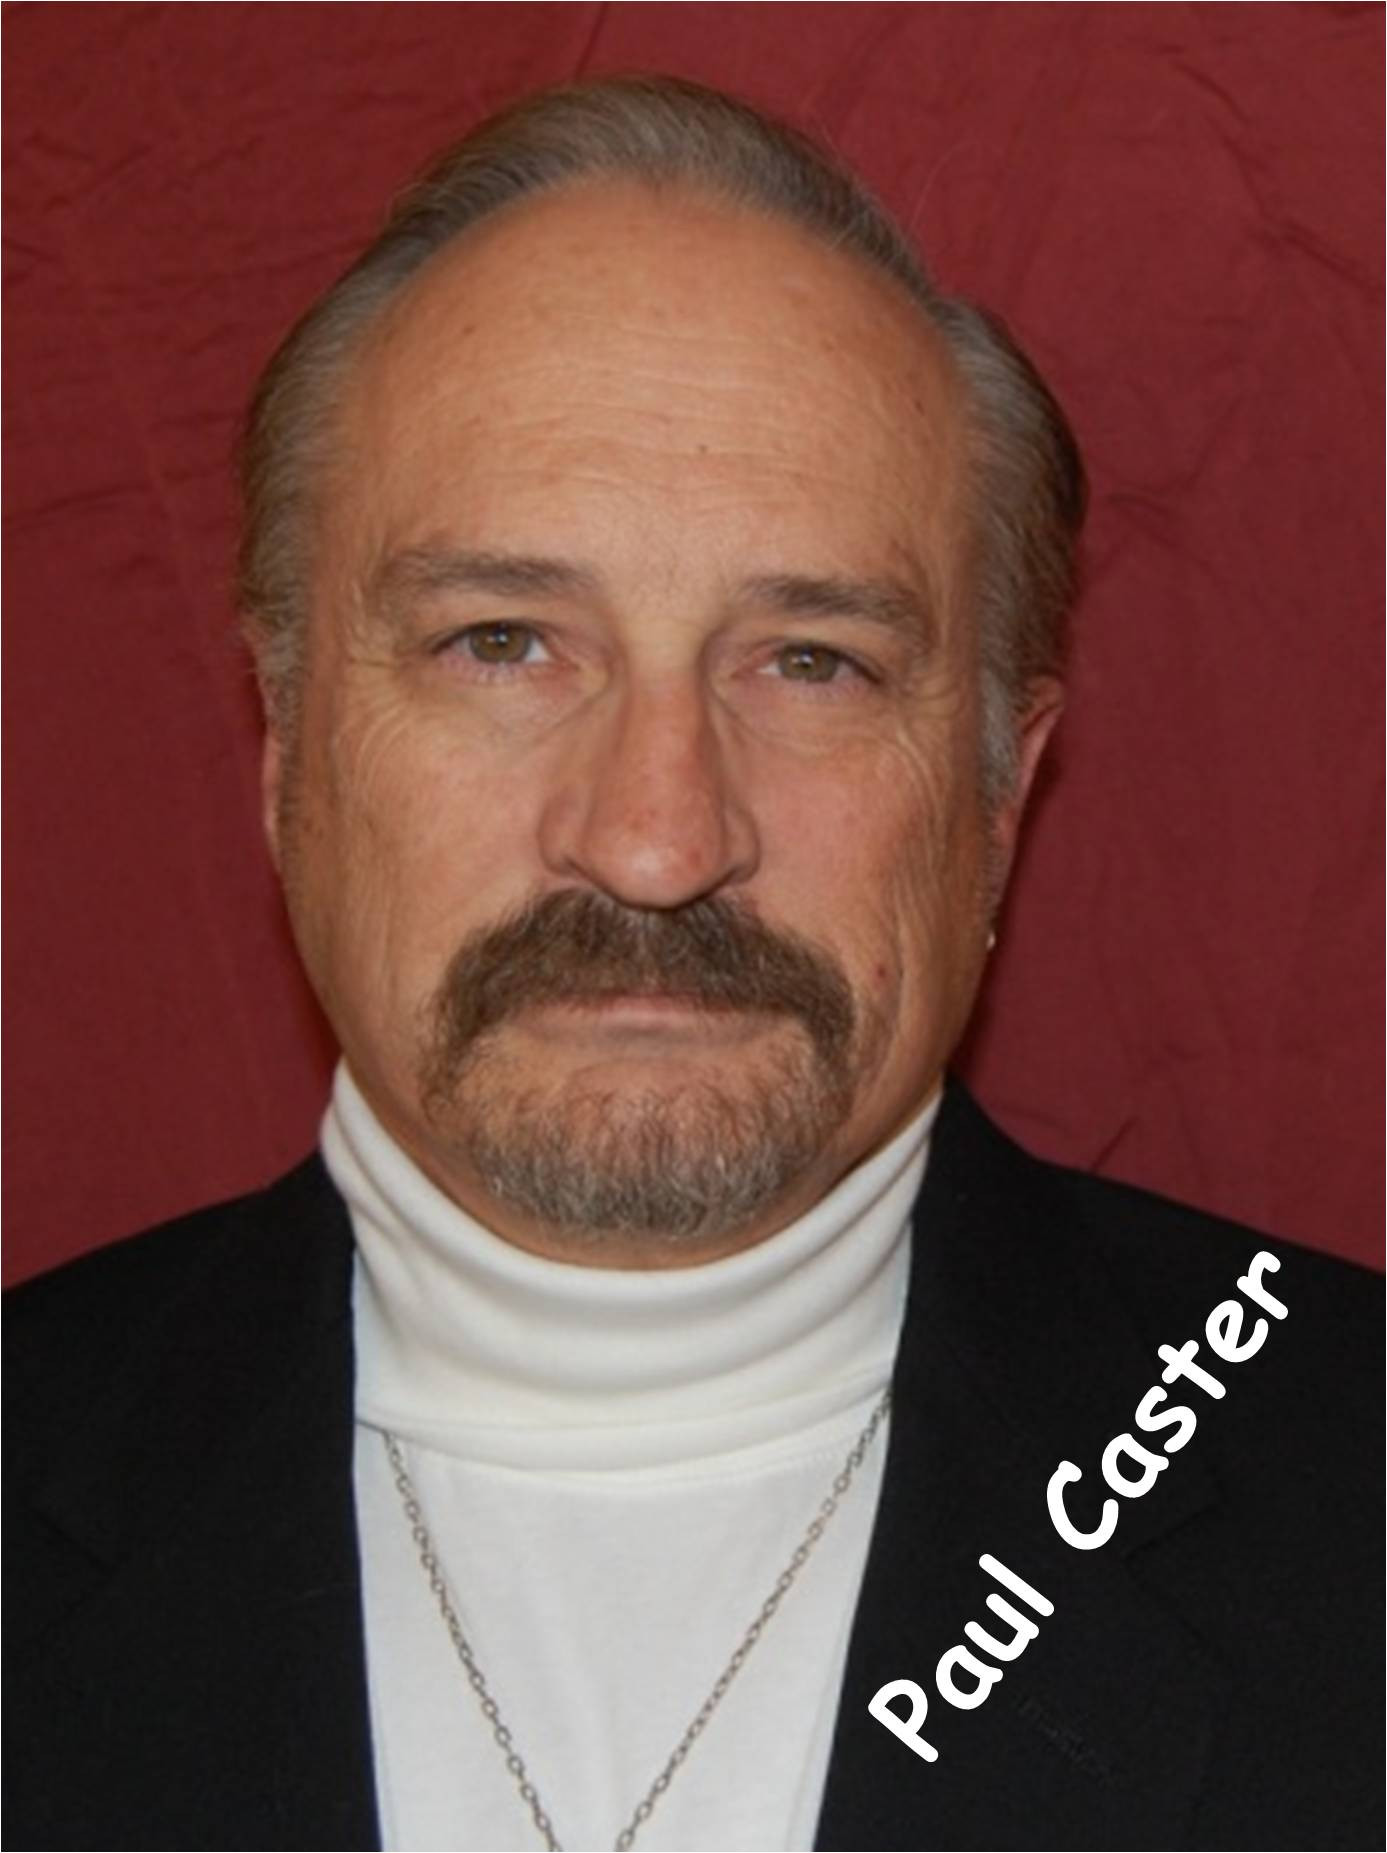 Paul Caster